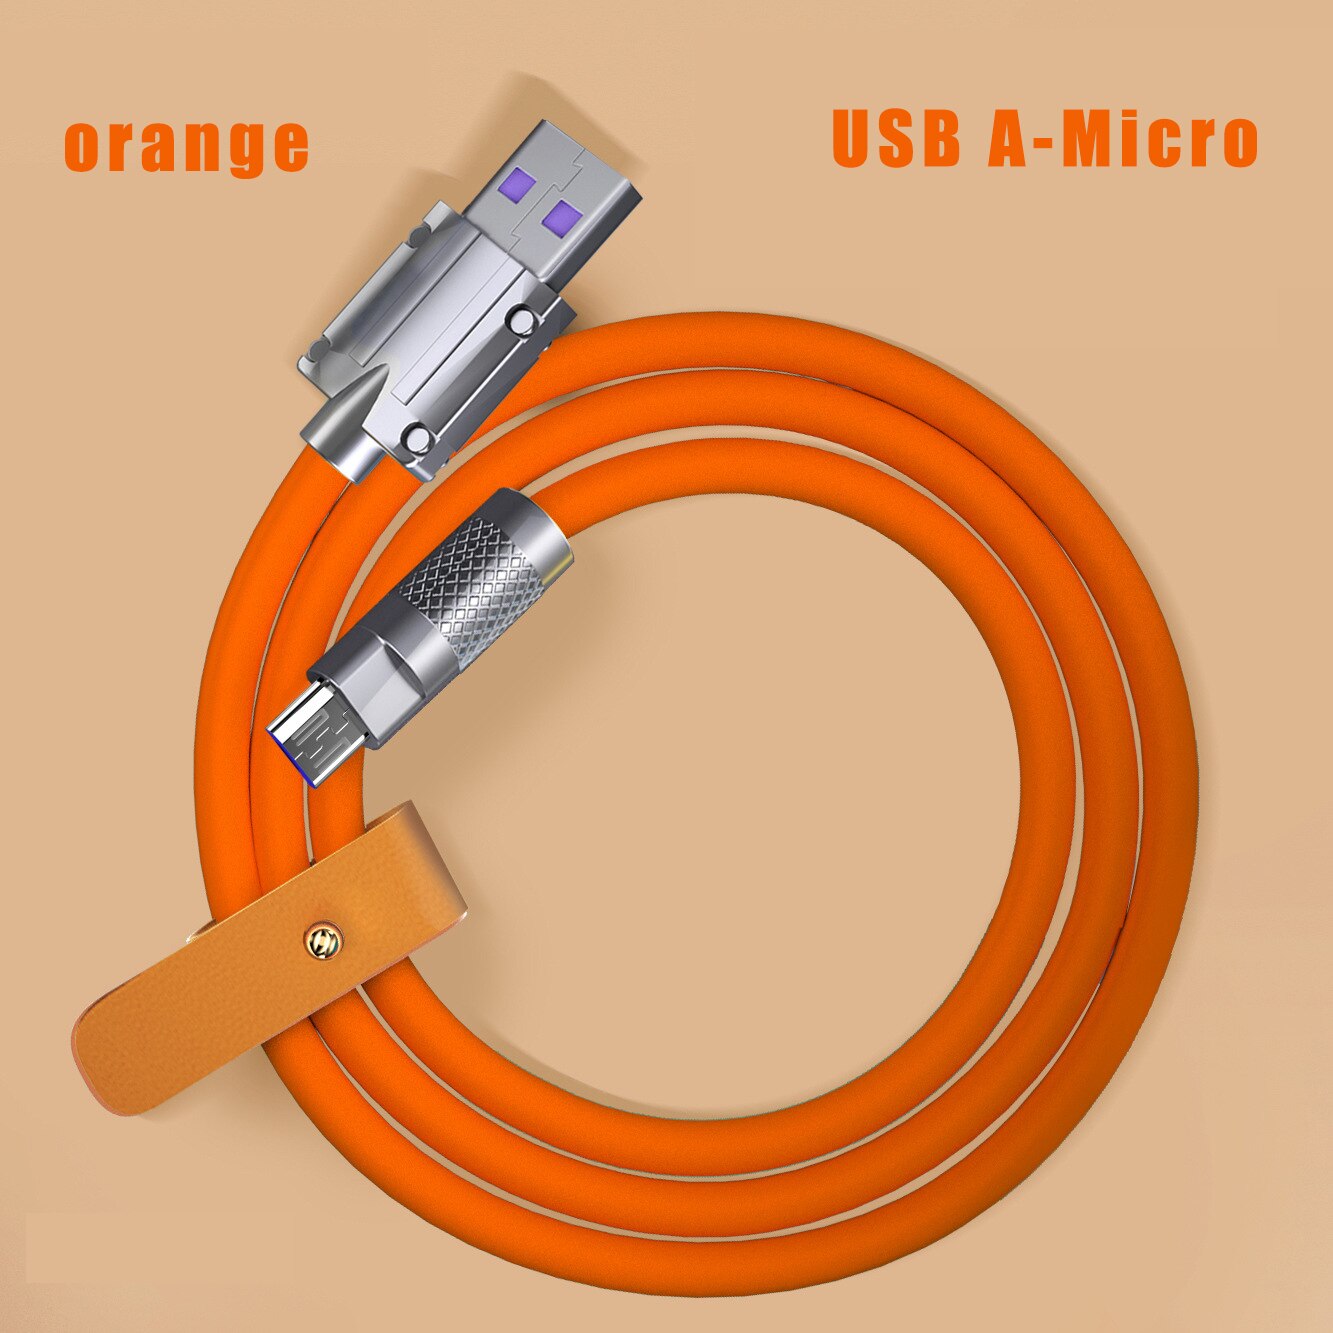 orange USB A - Micro